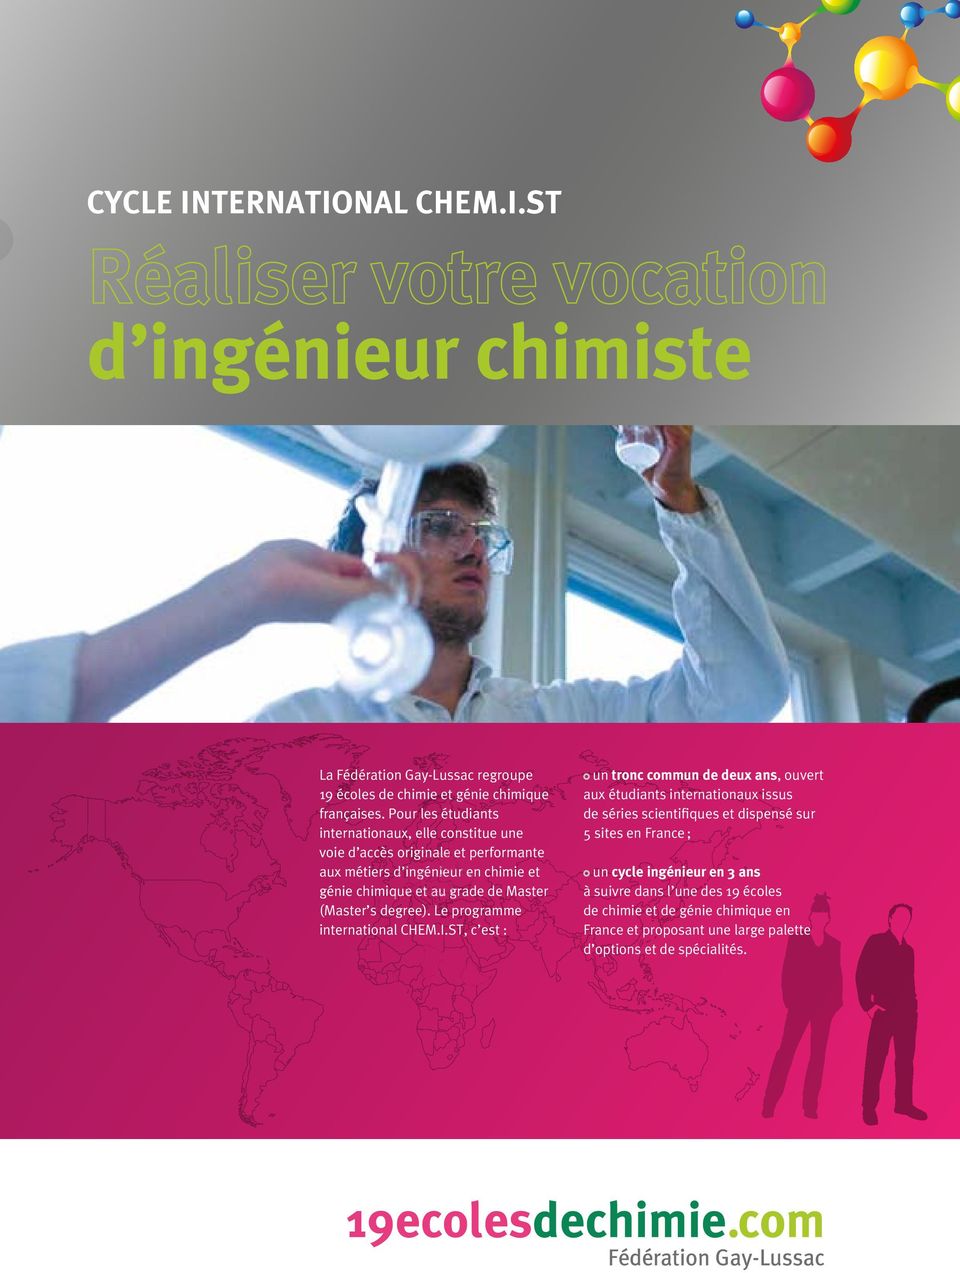 Master (Master s degree). Le programme international CHEM.I.